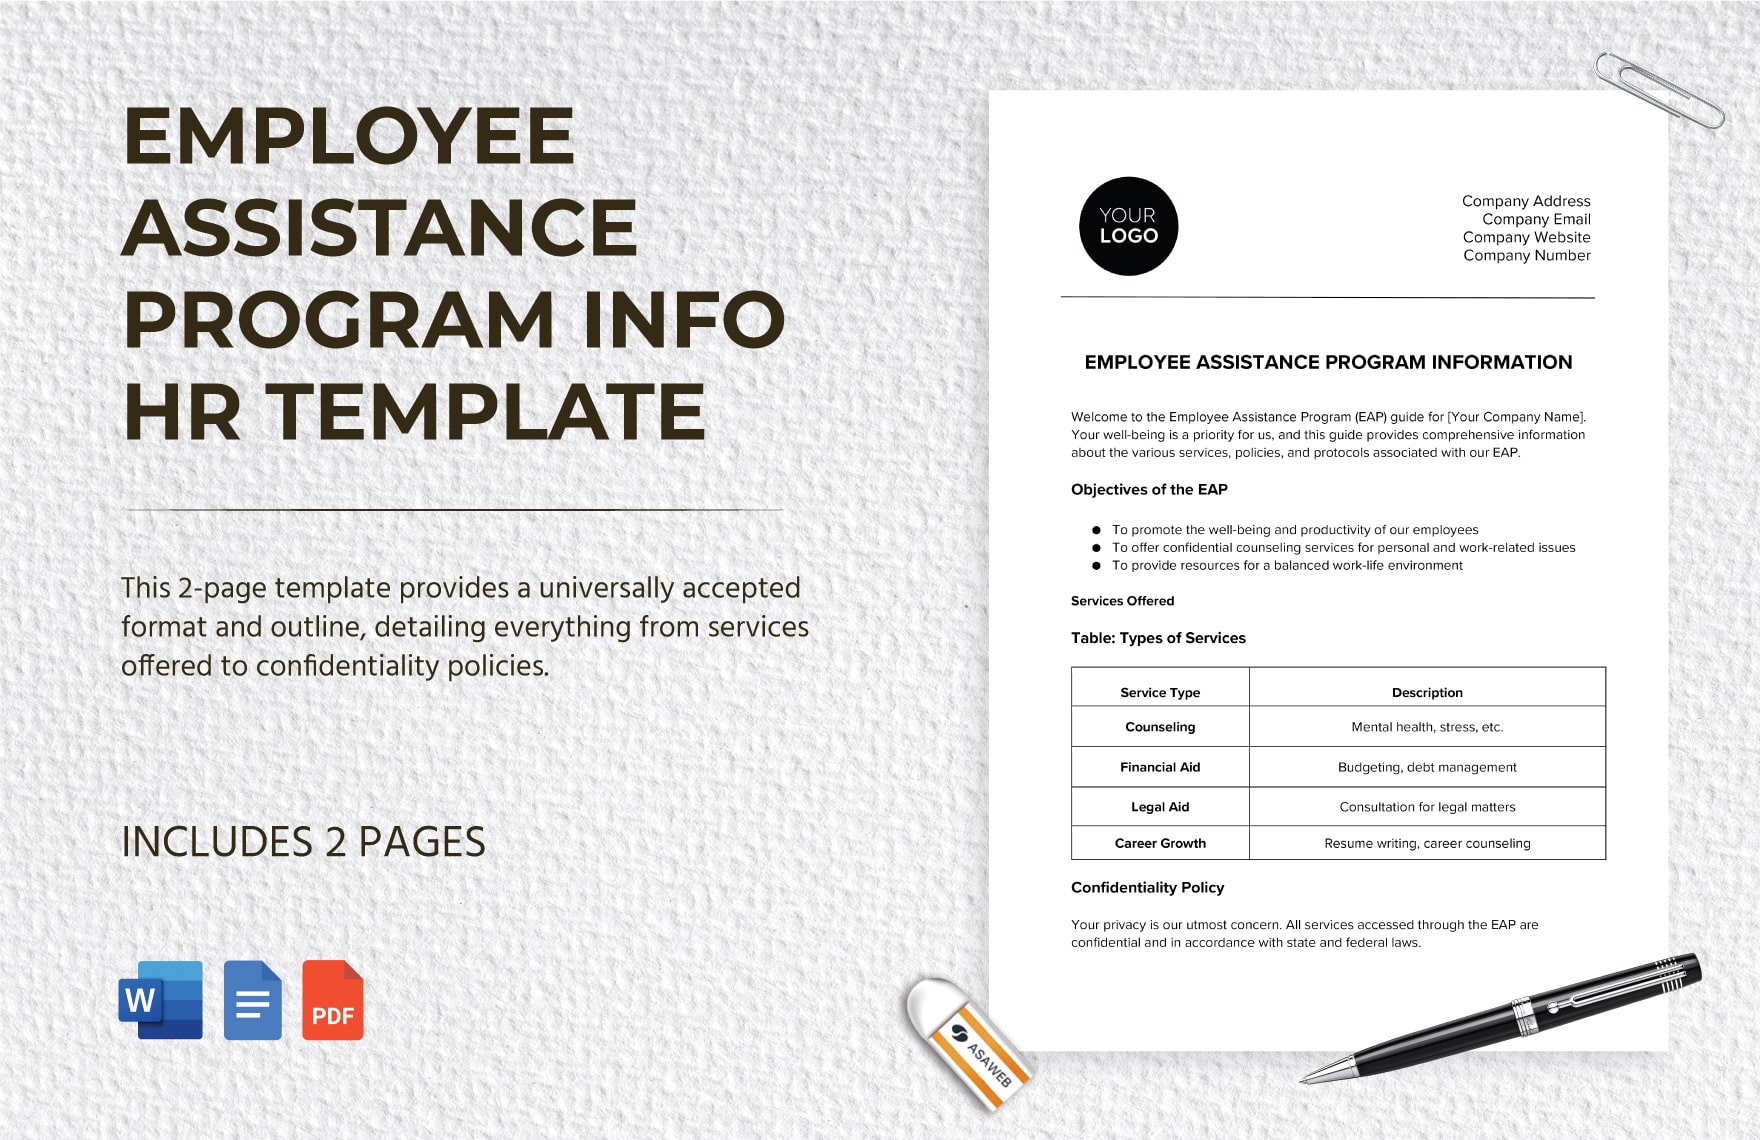 Employee Assistance Program Info HR Template in Word, Google Docs, PDF